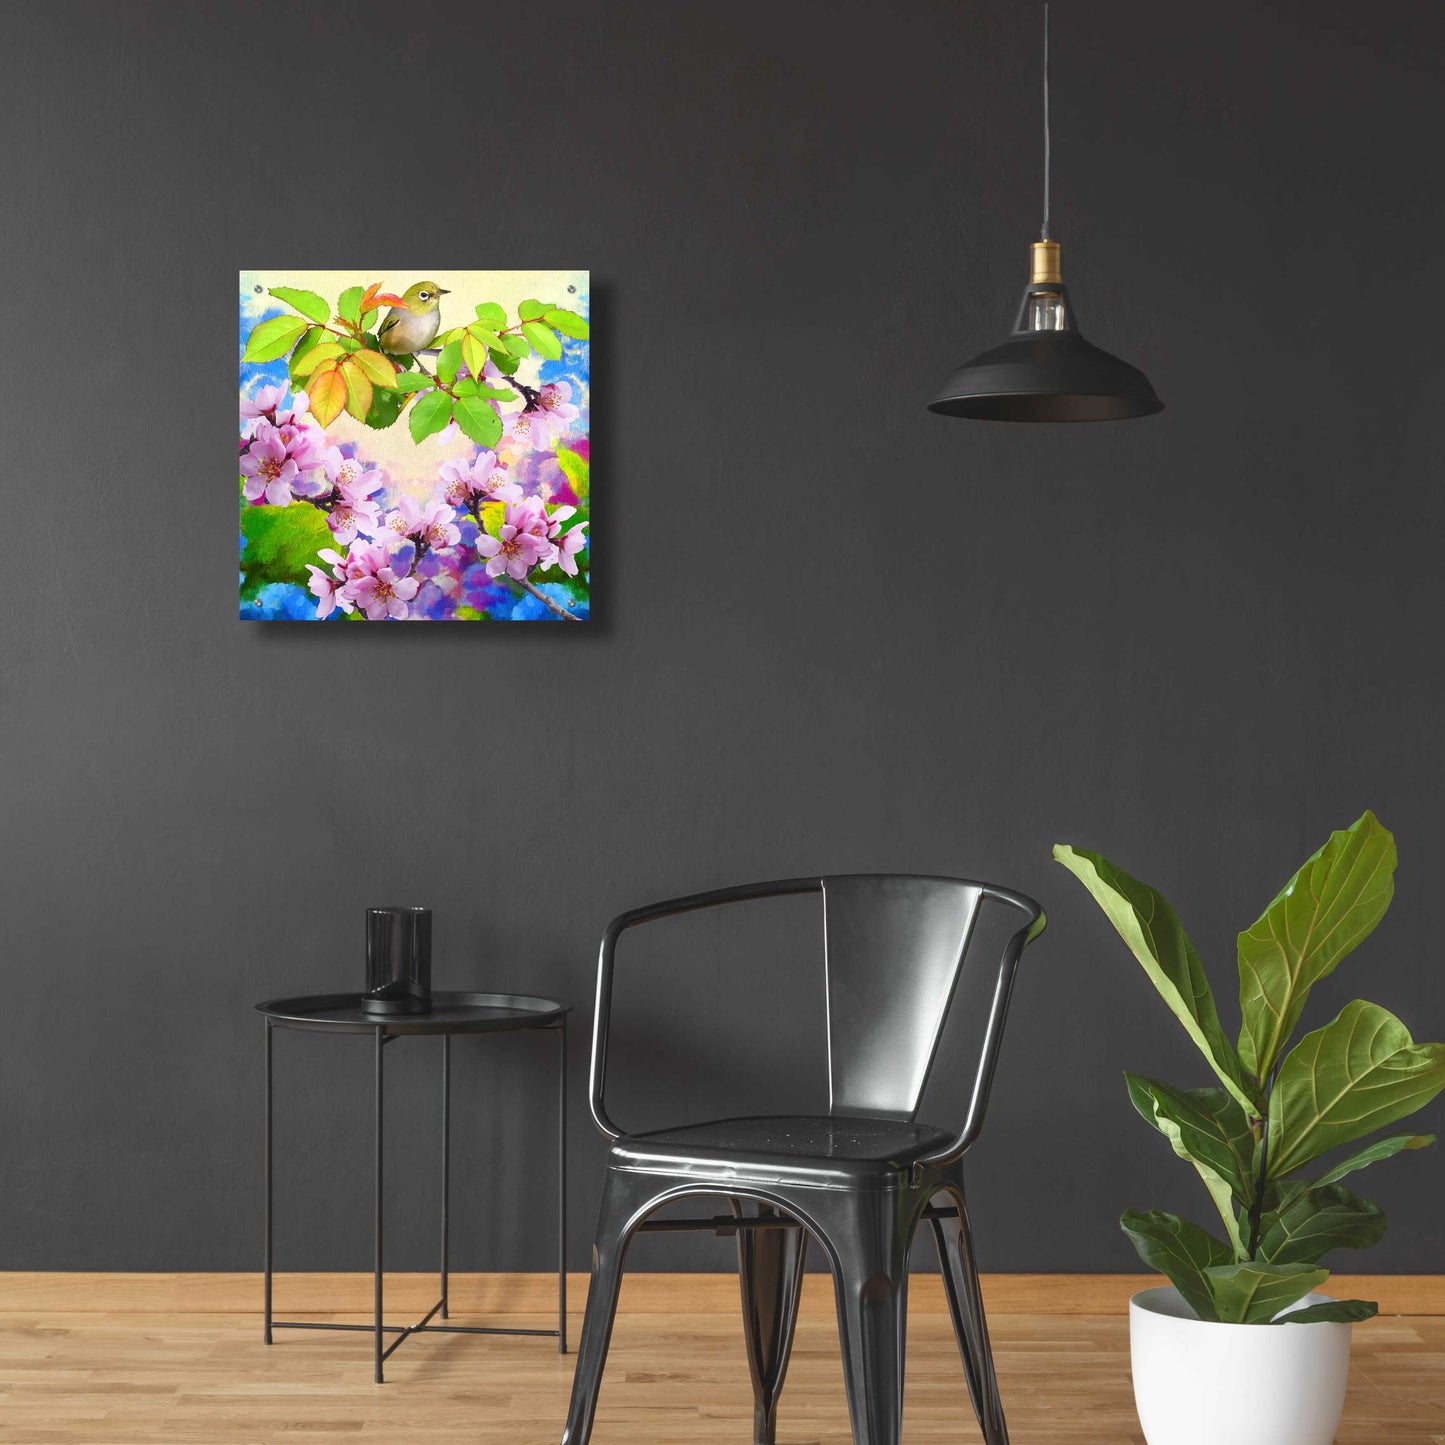 Epic Art 'Spring Colors 2' by Ata Alishahi, Acrylic Glass Wall Art,24x24